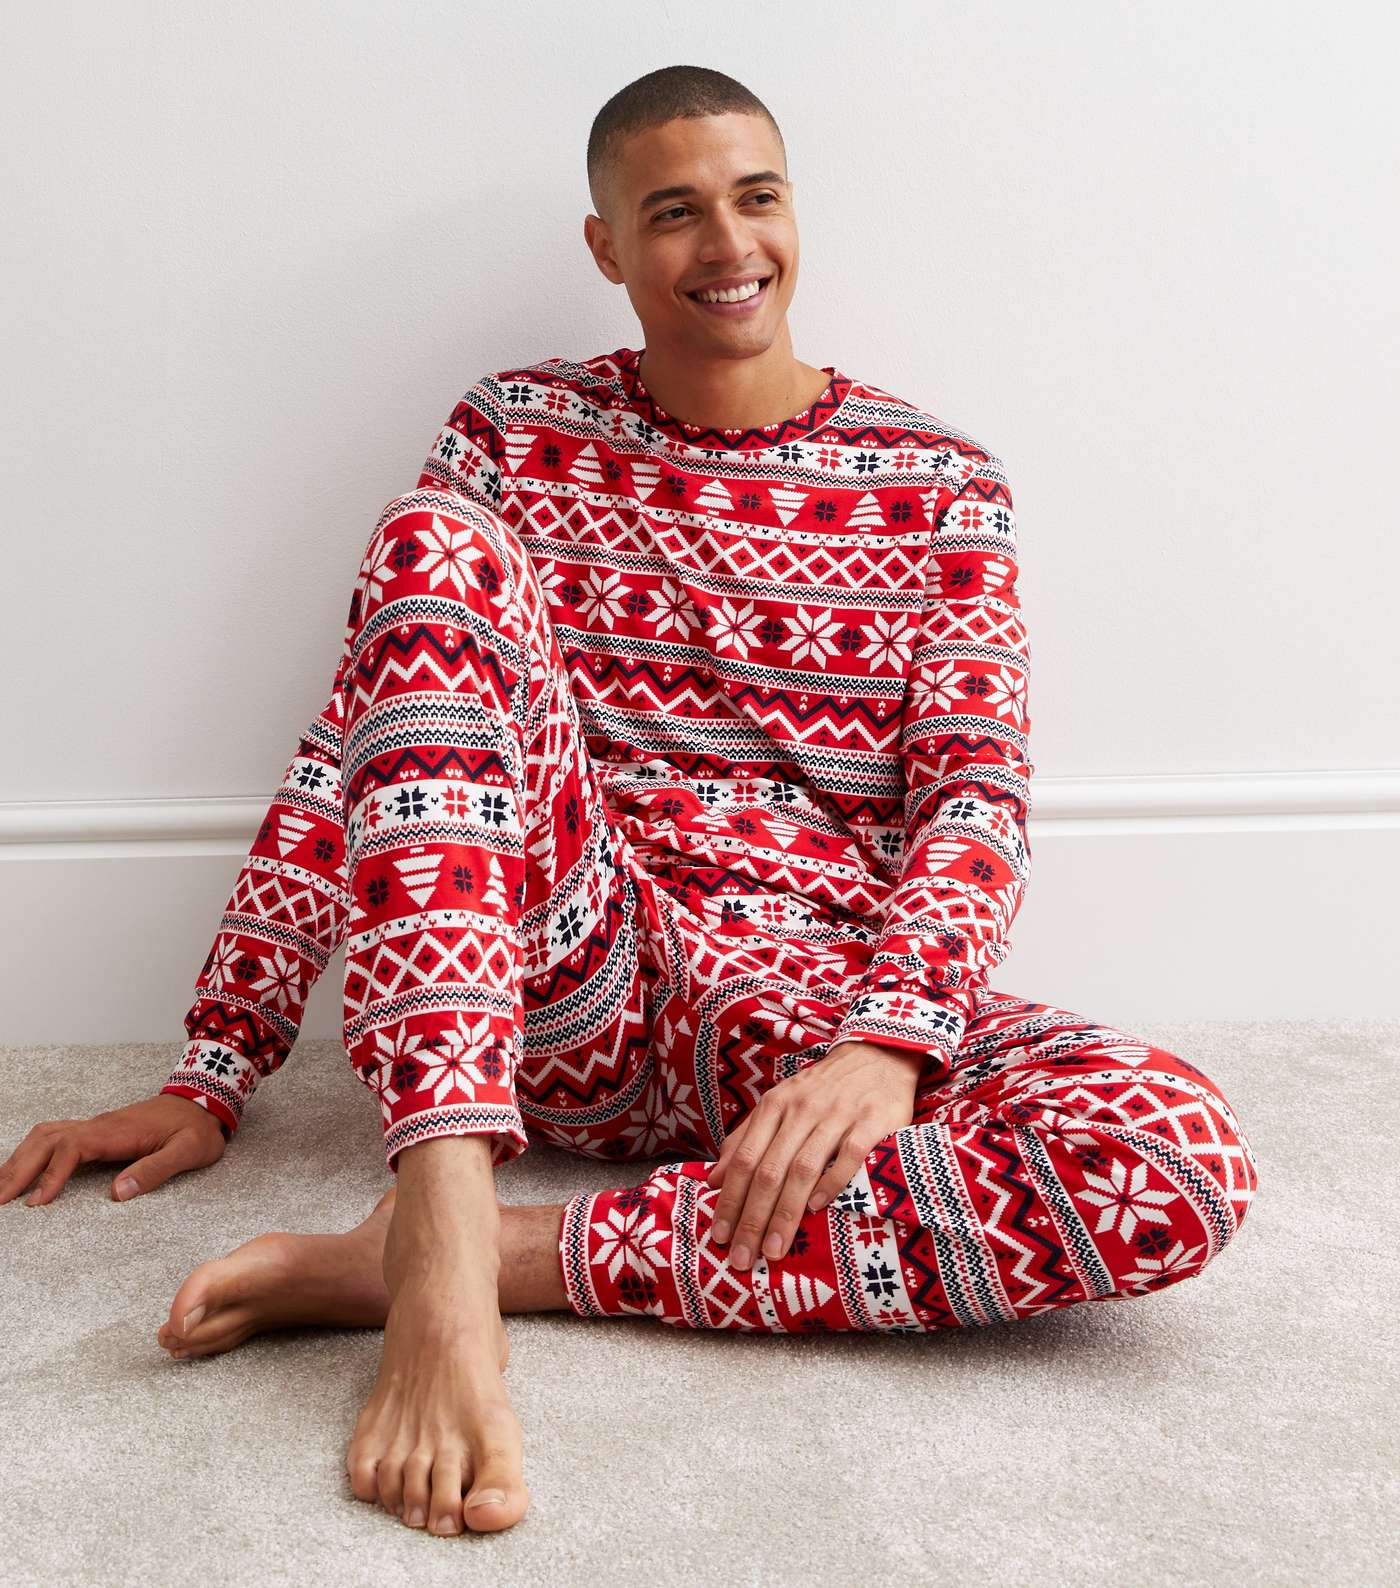 https://media3.newlookassets.com/i/newlook/875446369/mens/clothing/nightwear/red-soft-touch-christmas-family-pyjama-set-with-fair-isle-pattern.jpg?strip=true&w=1400&qlt=60&fmt=jpeg